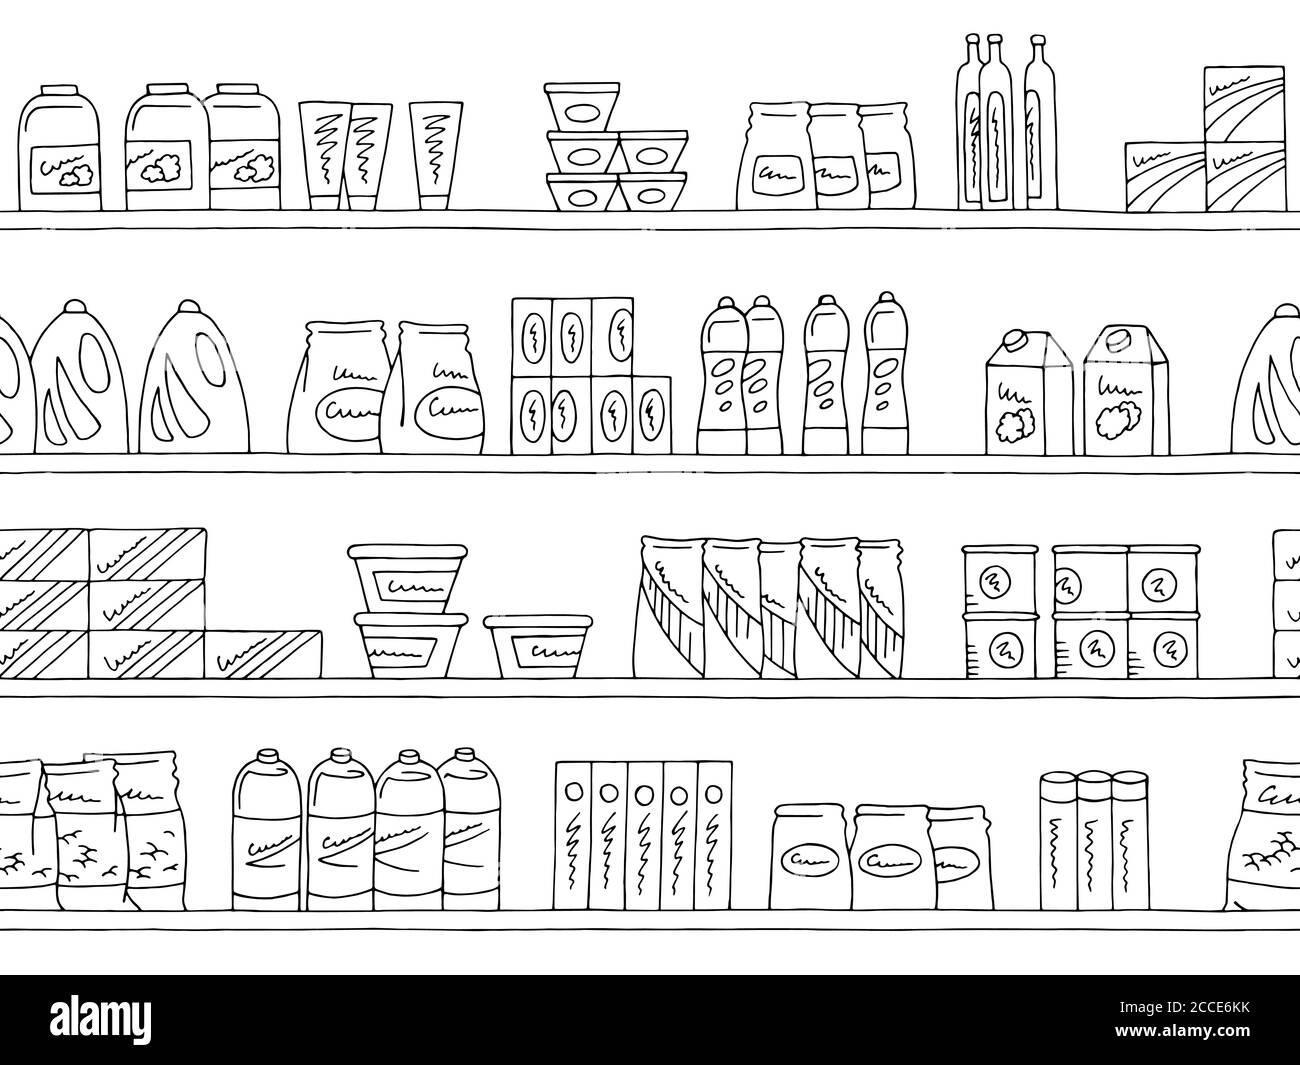 pagina para colorear de supermercado